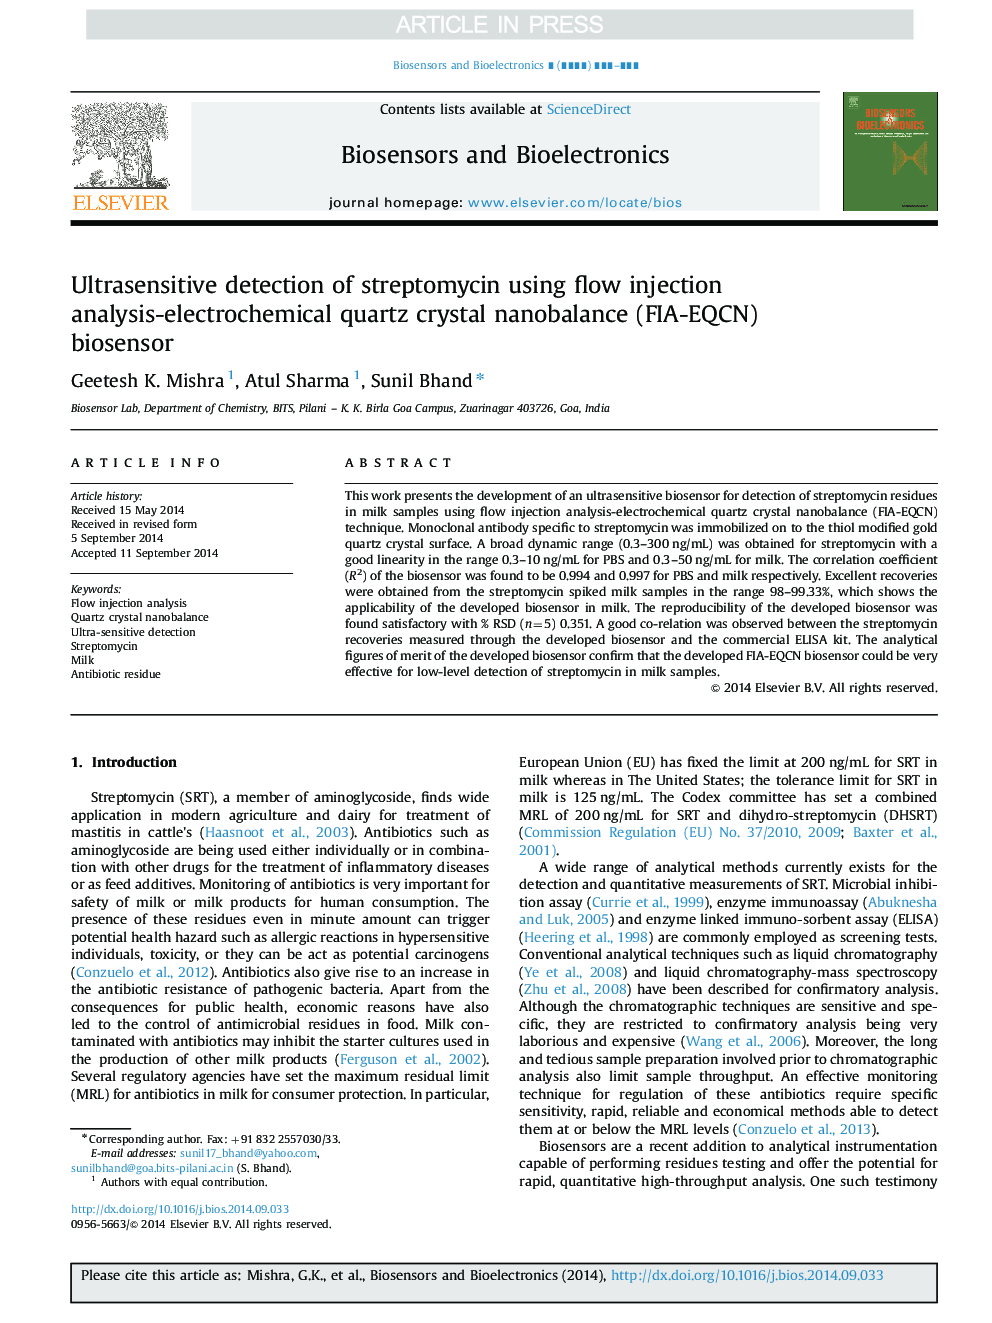 Ultrasensitive detection of streptomycin using flow injection analysis-electrochemical quartz crystal nanobalance (FIA-EQCN) biosensor